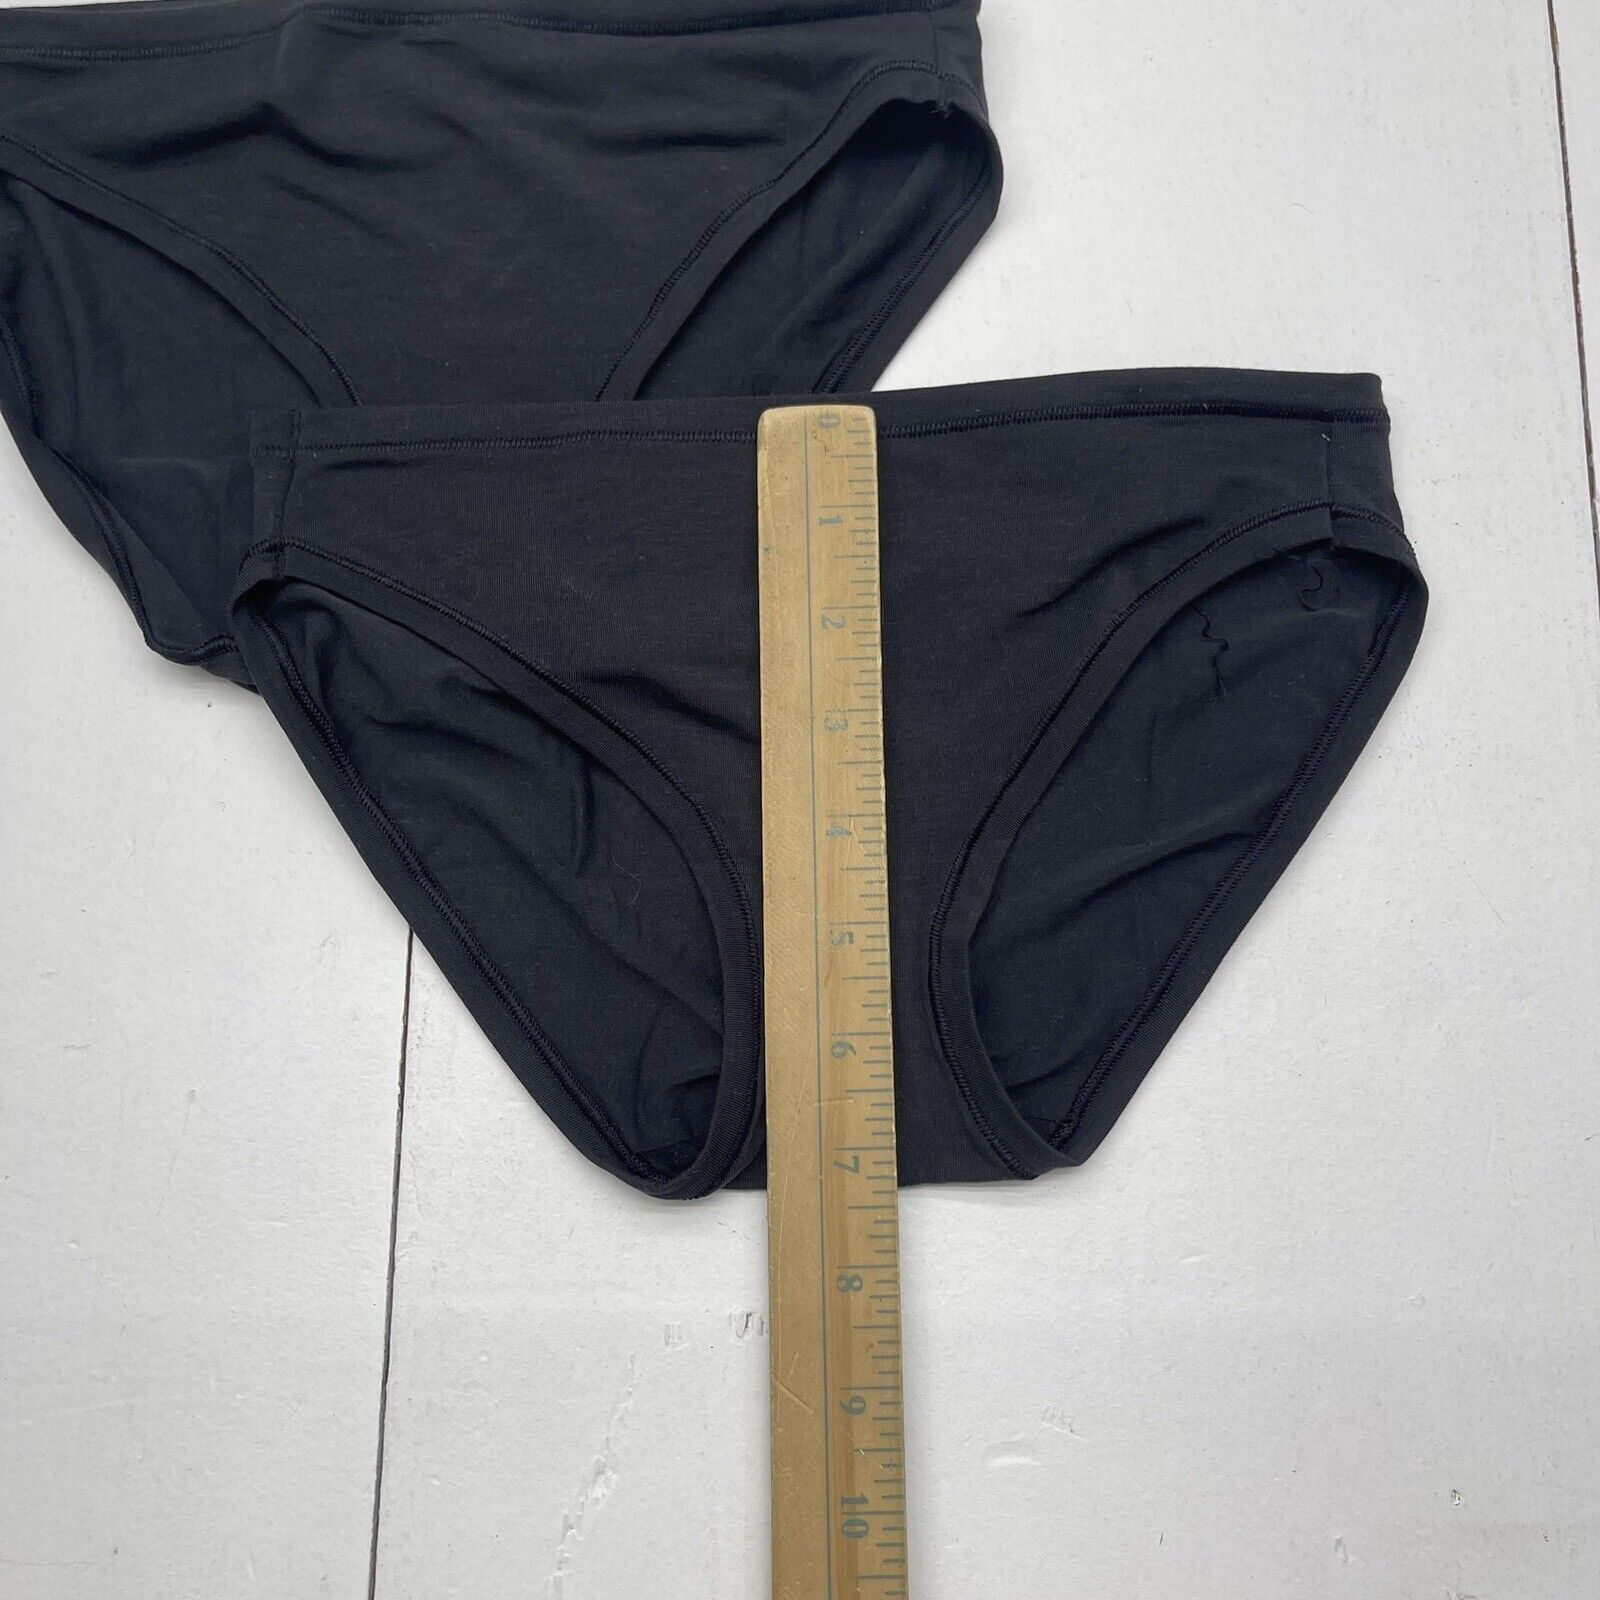 Gap Body Black Breathe Bikini Underwear 2 Pack Women's Medium NWOT